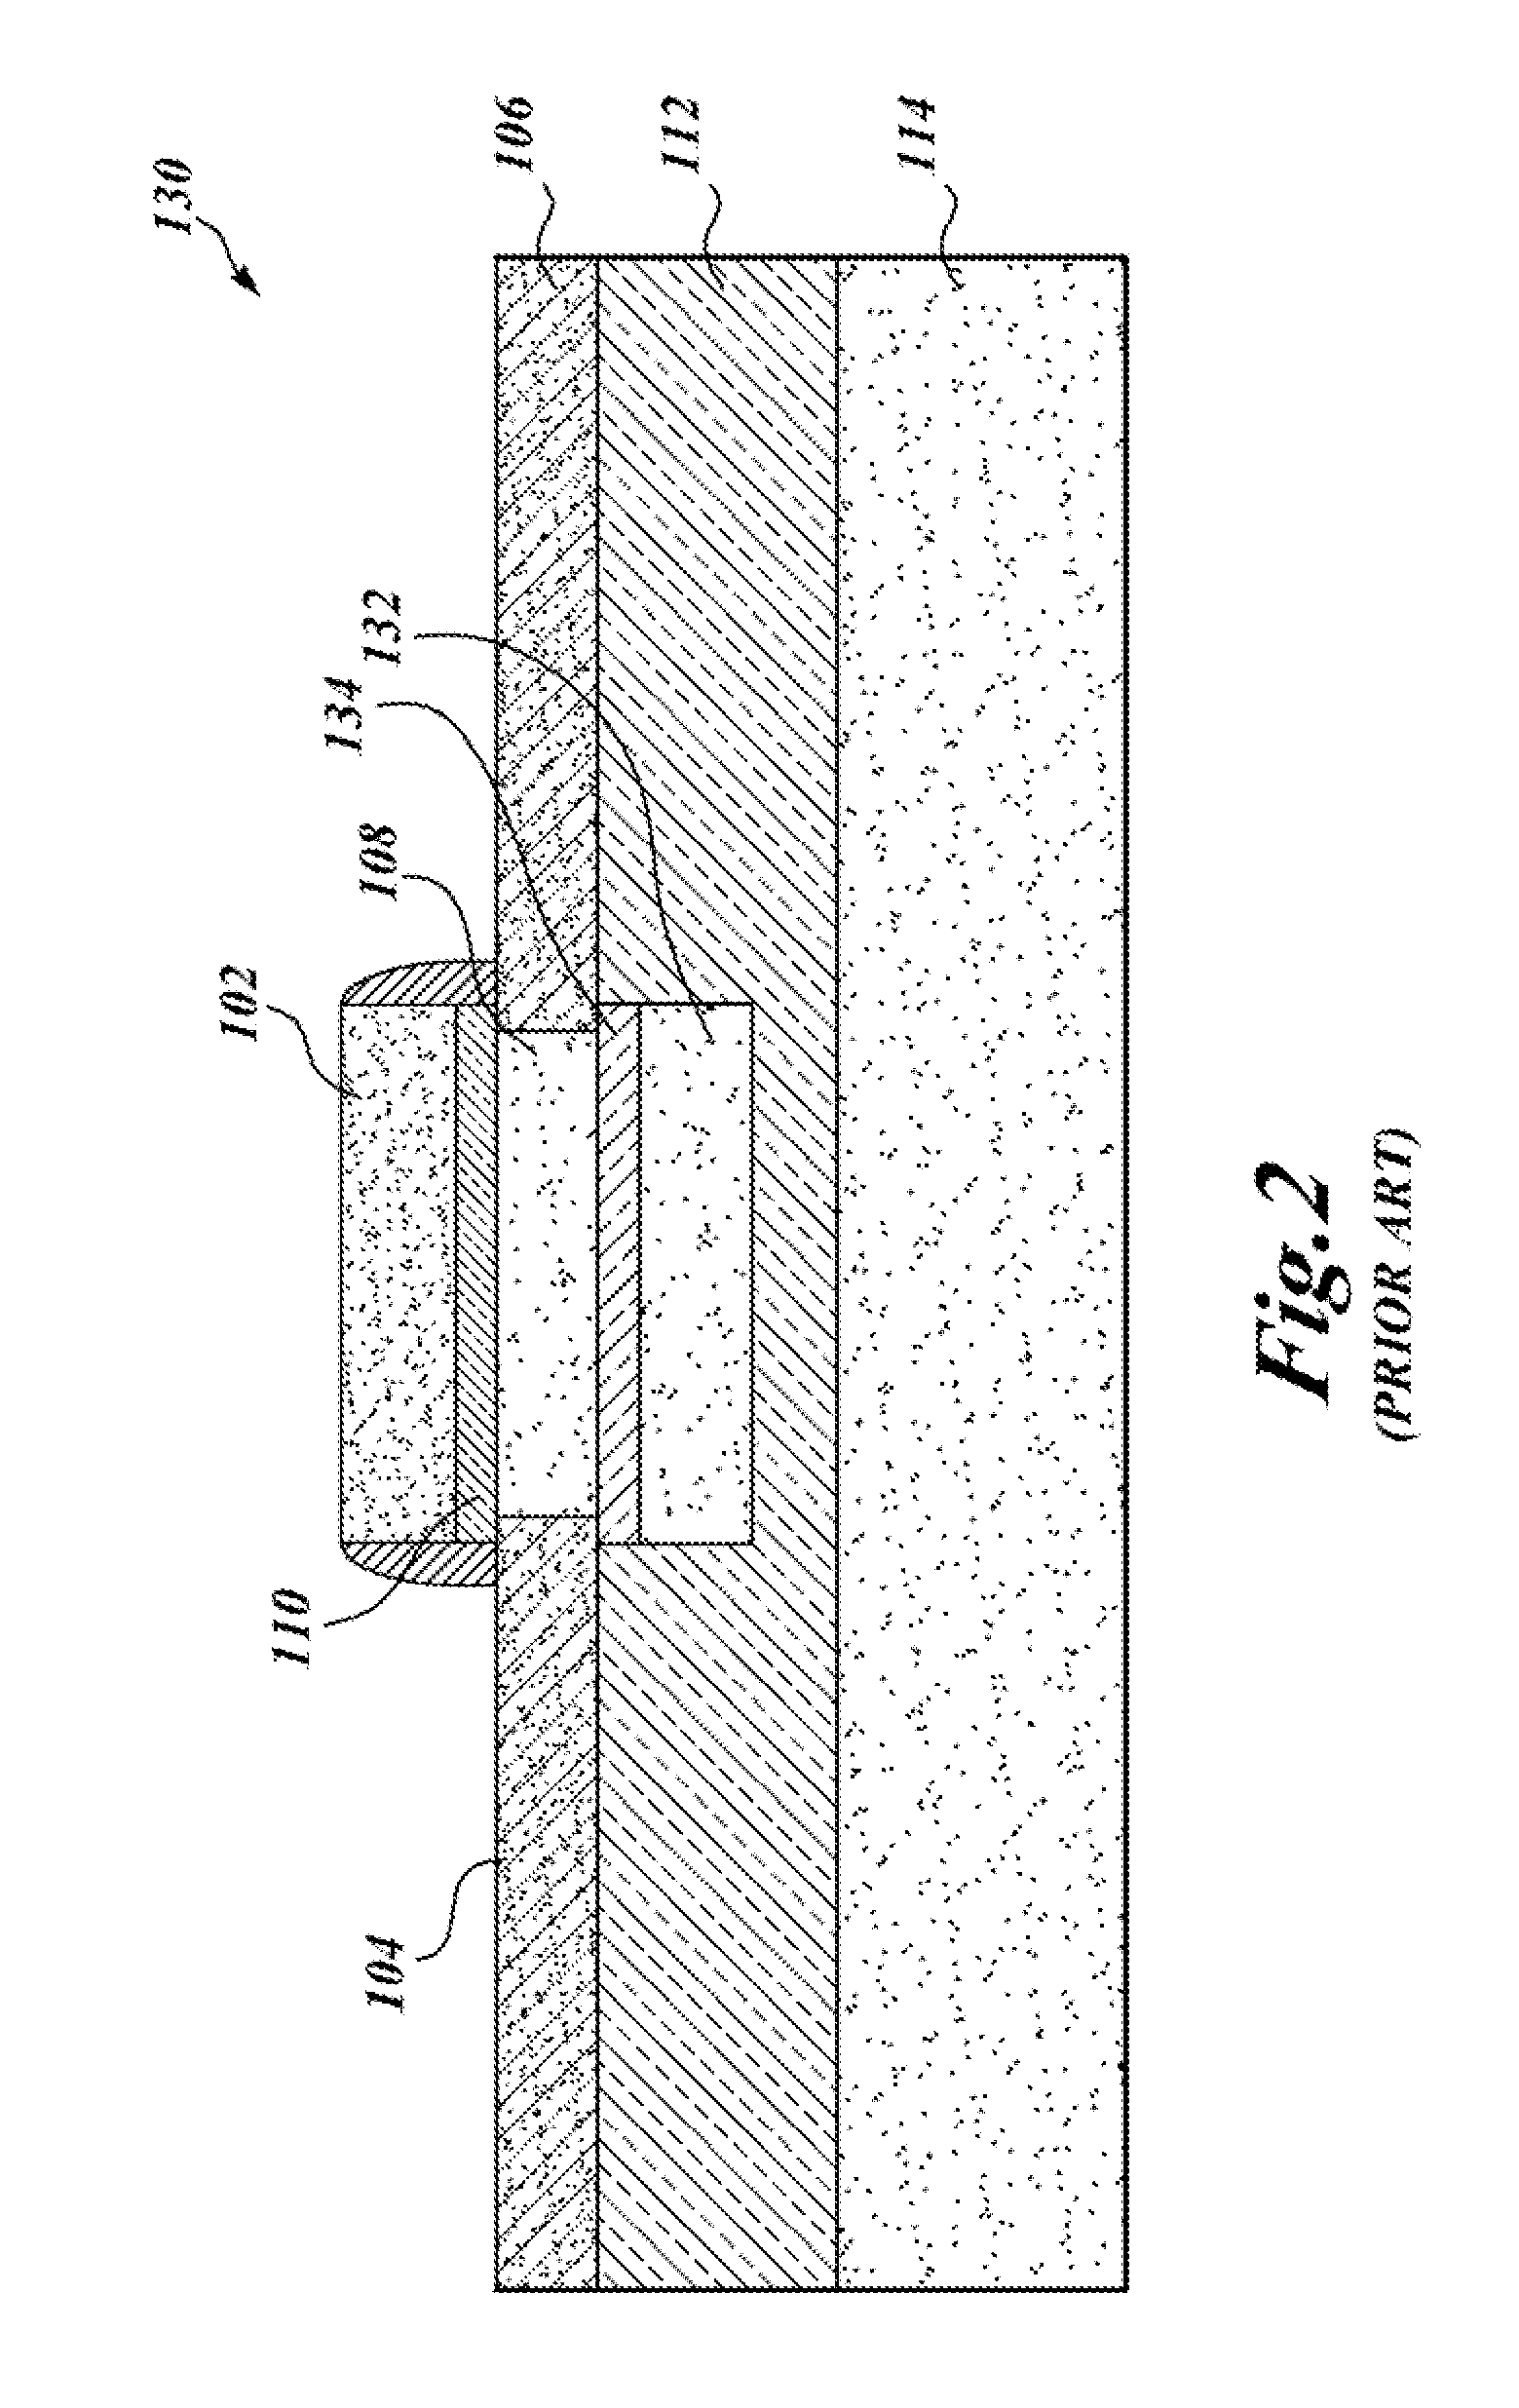 Dual gate fd-soi transistor